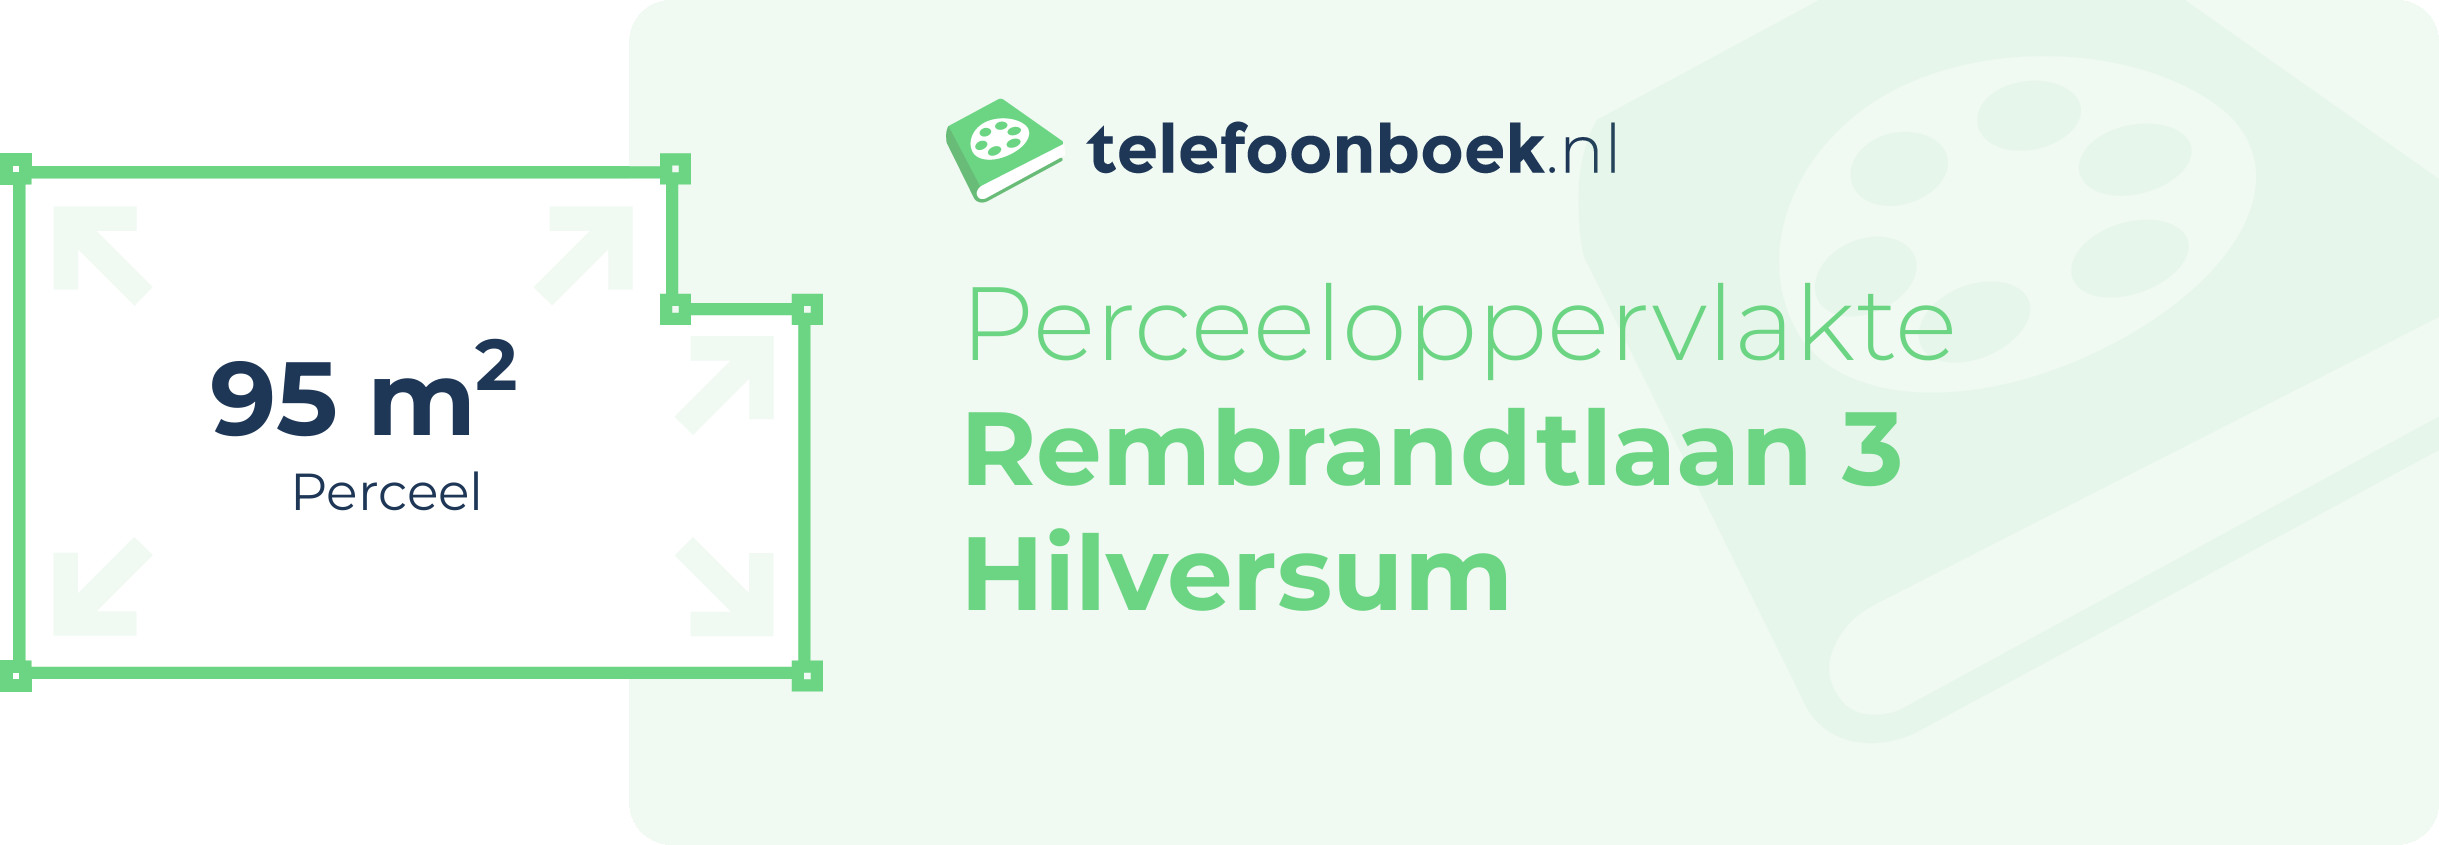 Perceeloppervlakte Rembrandtlaan 3 Hilversum